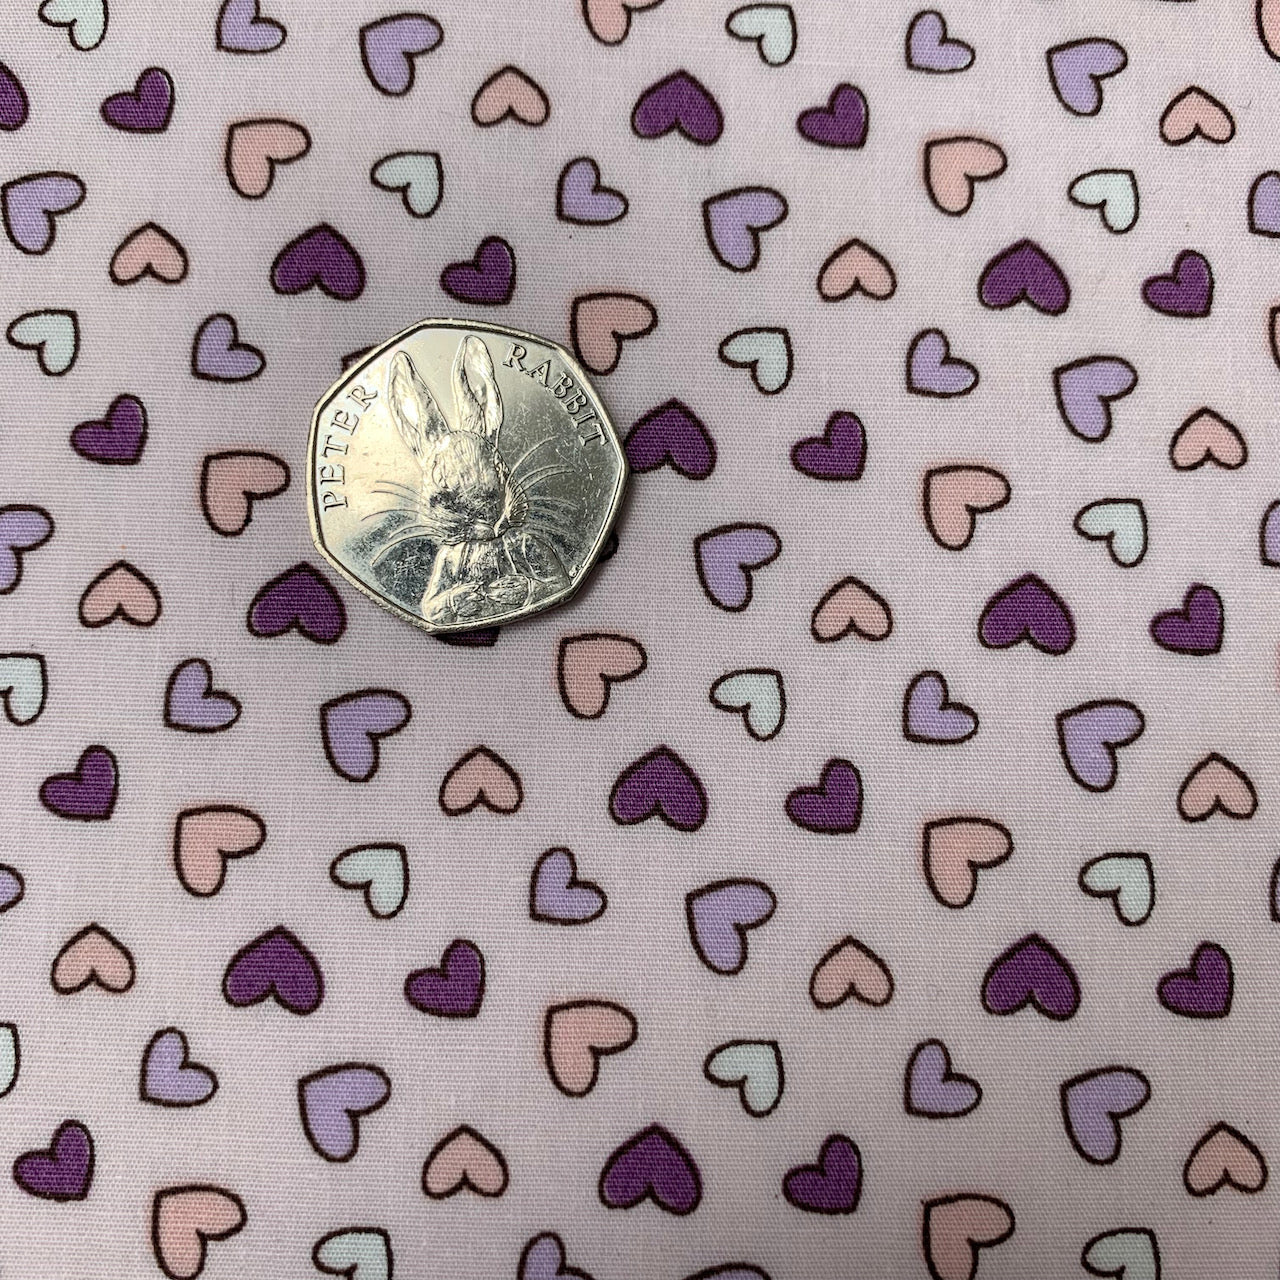 Fabric Felt Sheet - Hearts in Lilac